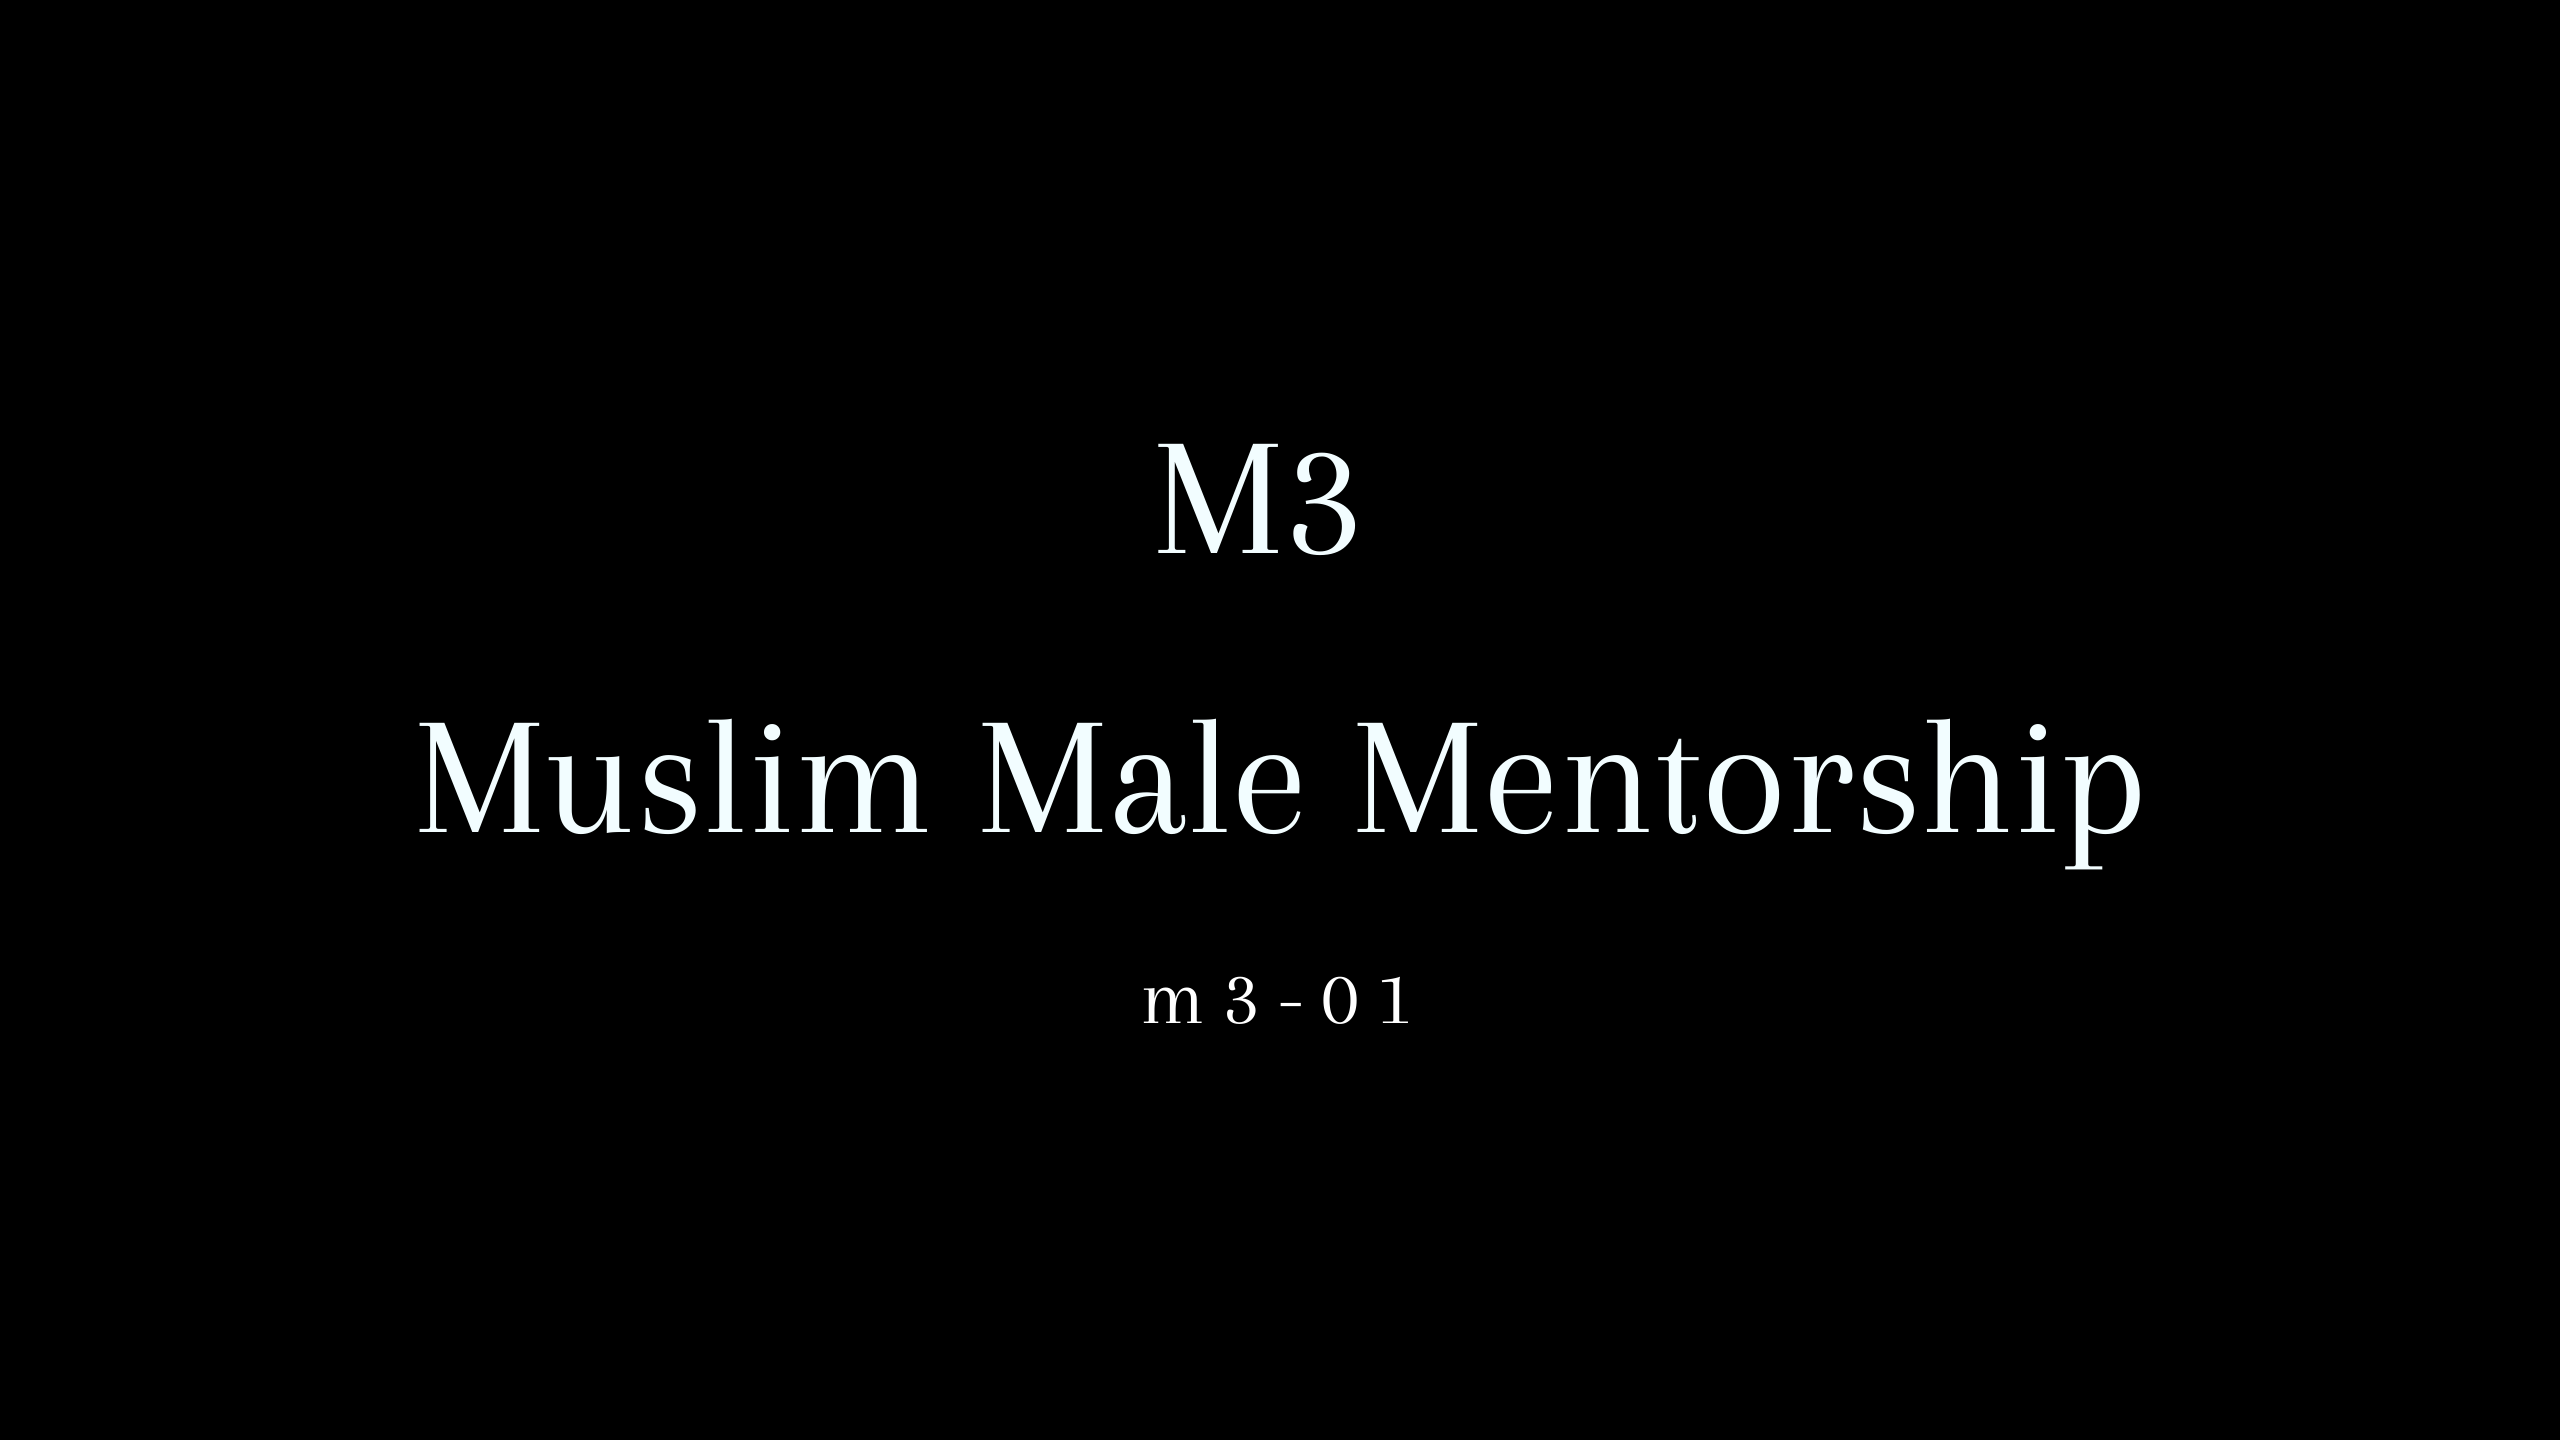 ﻿The Muslimah Girl Talk 02